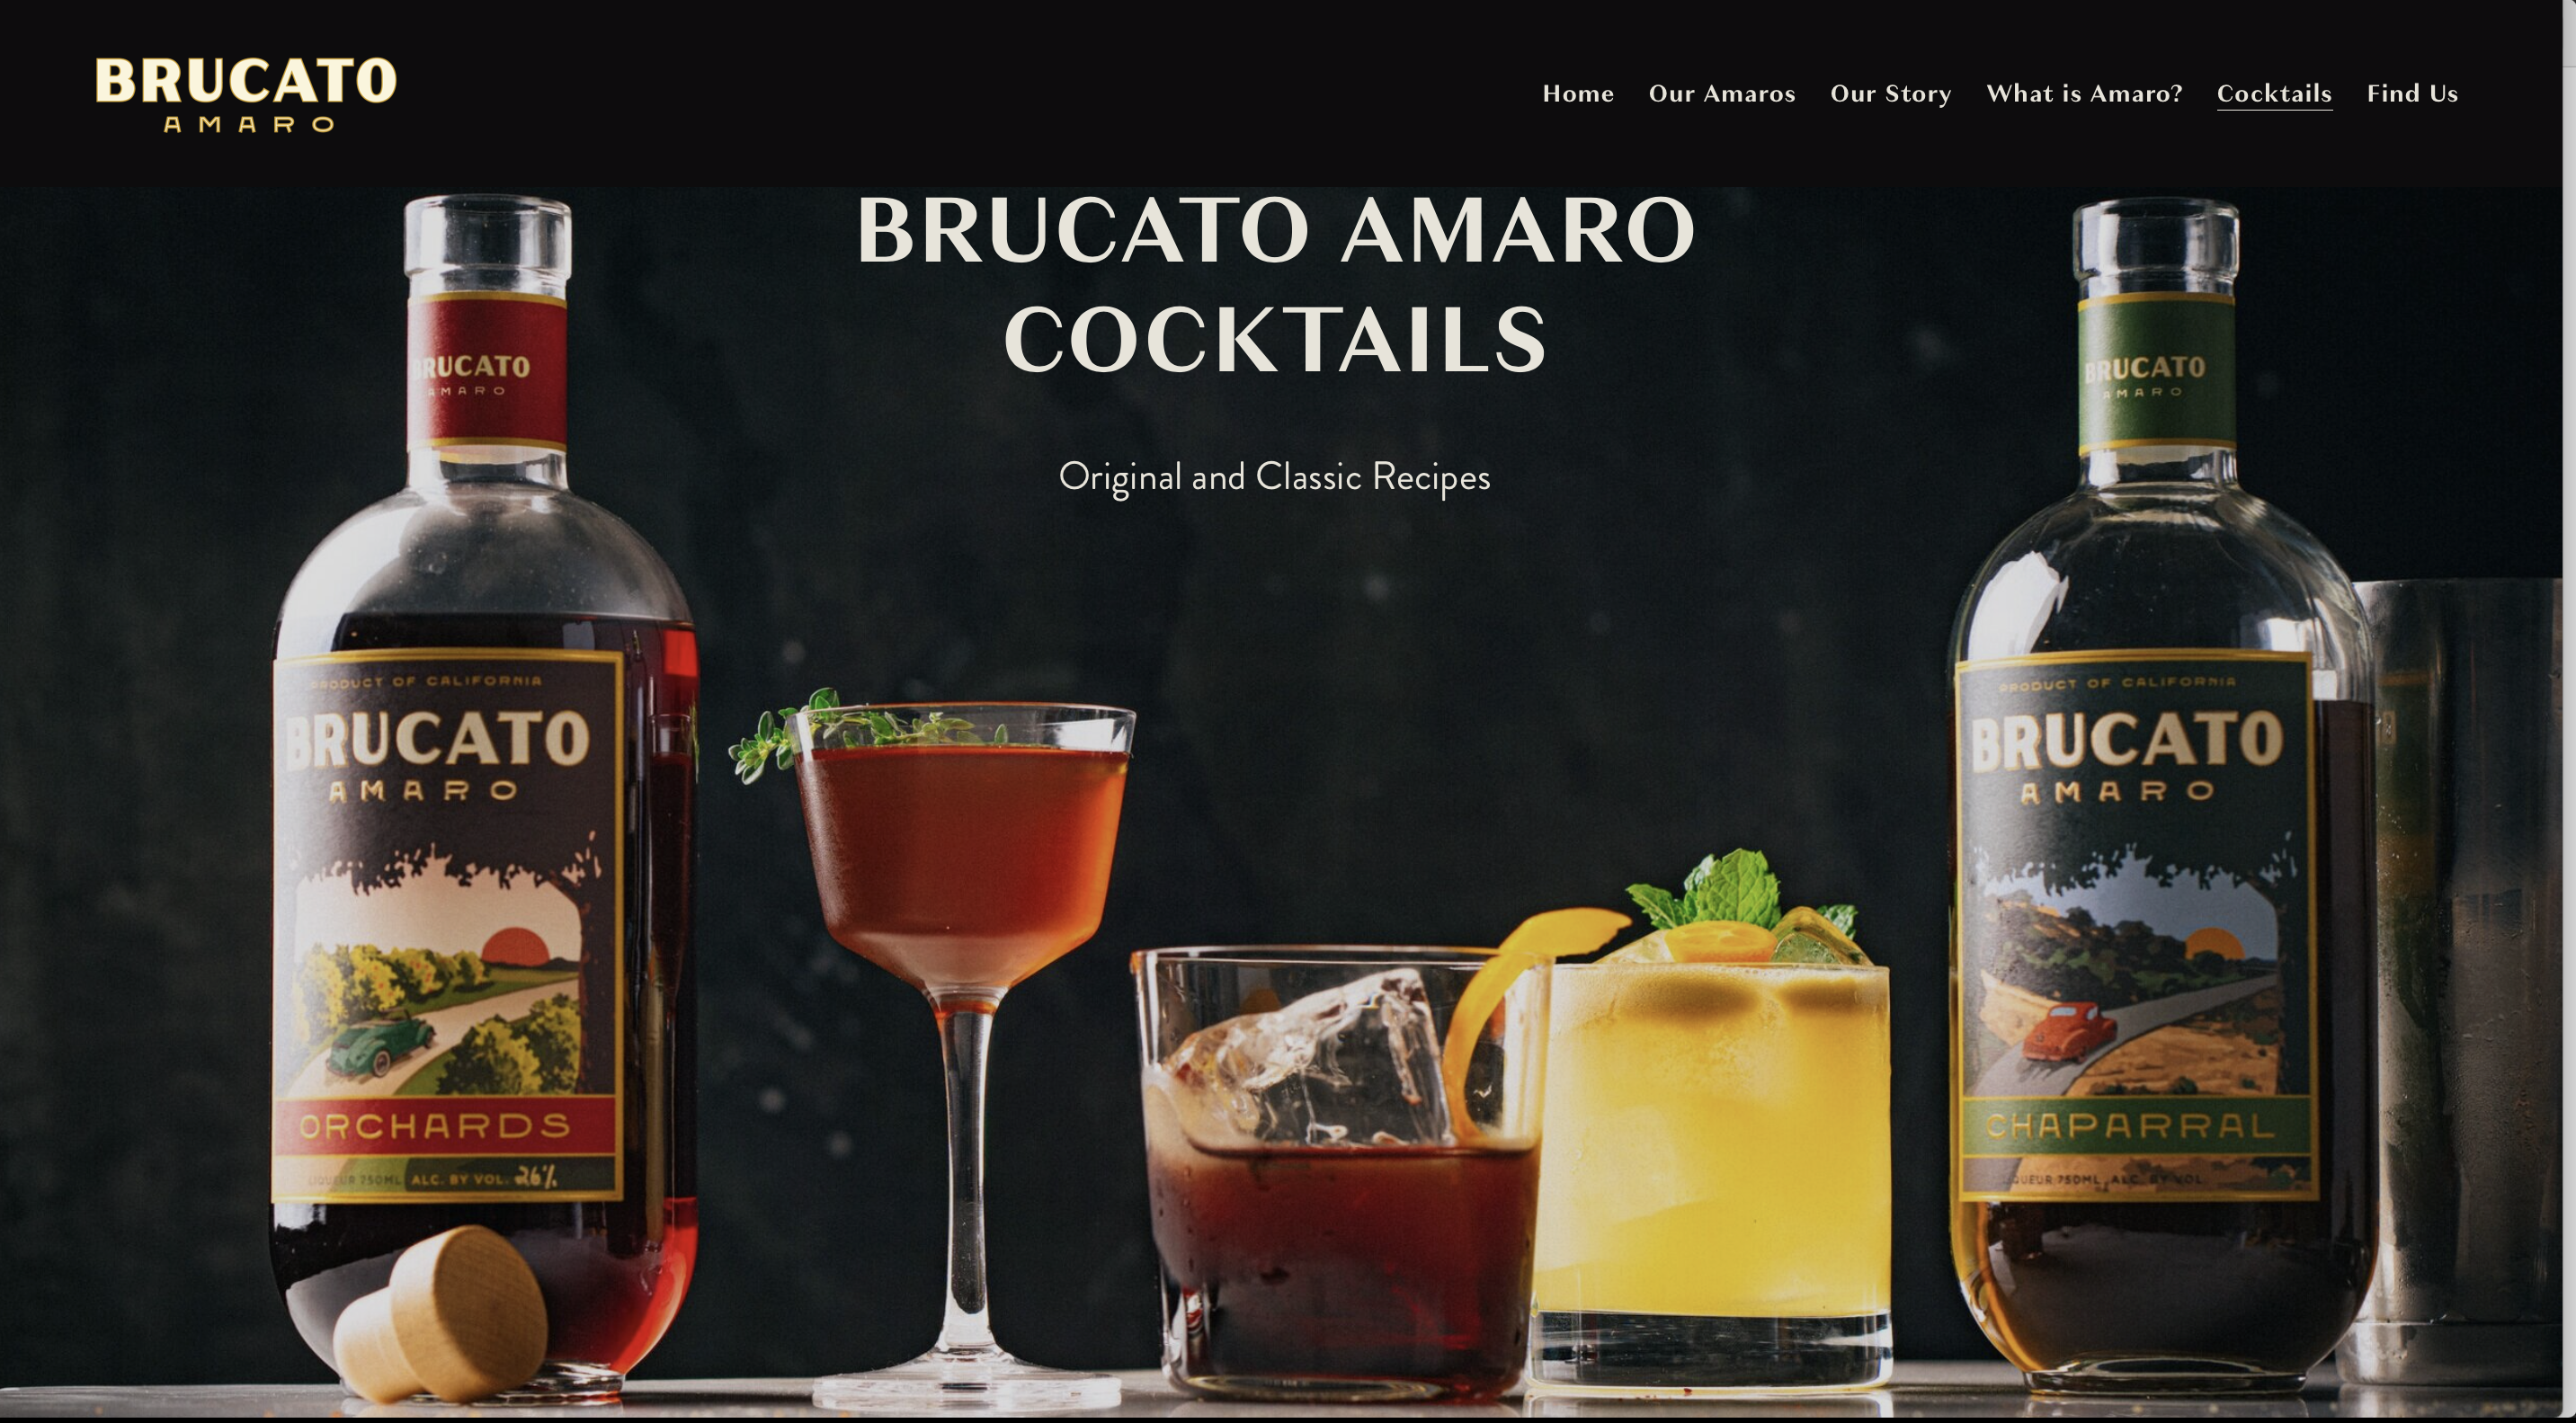 Brucato Amaro design